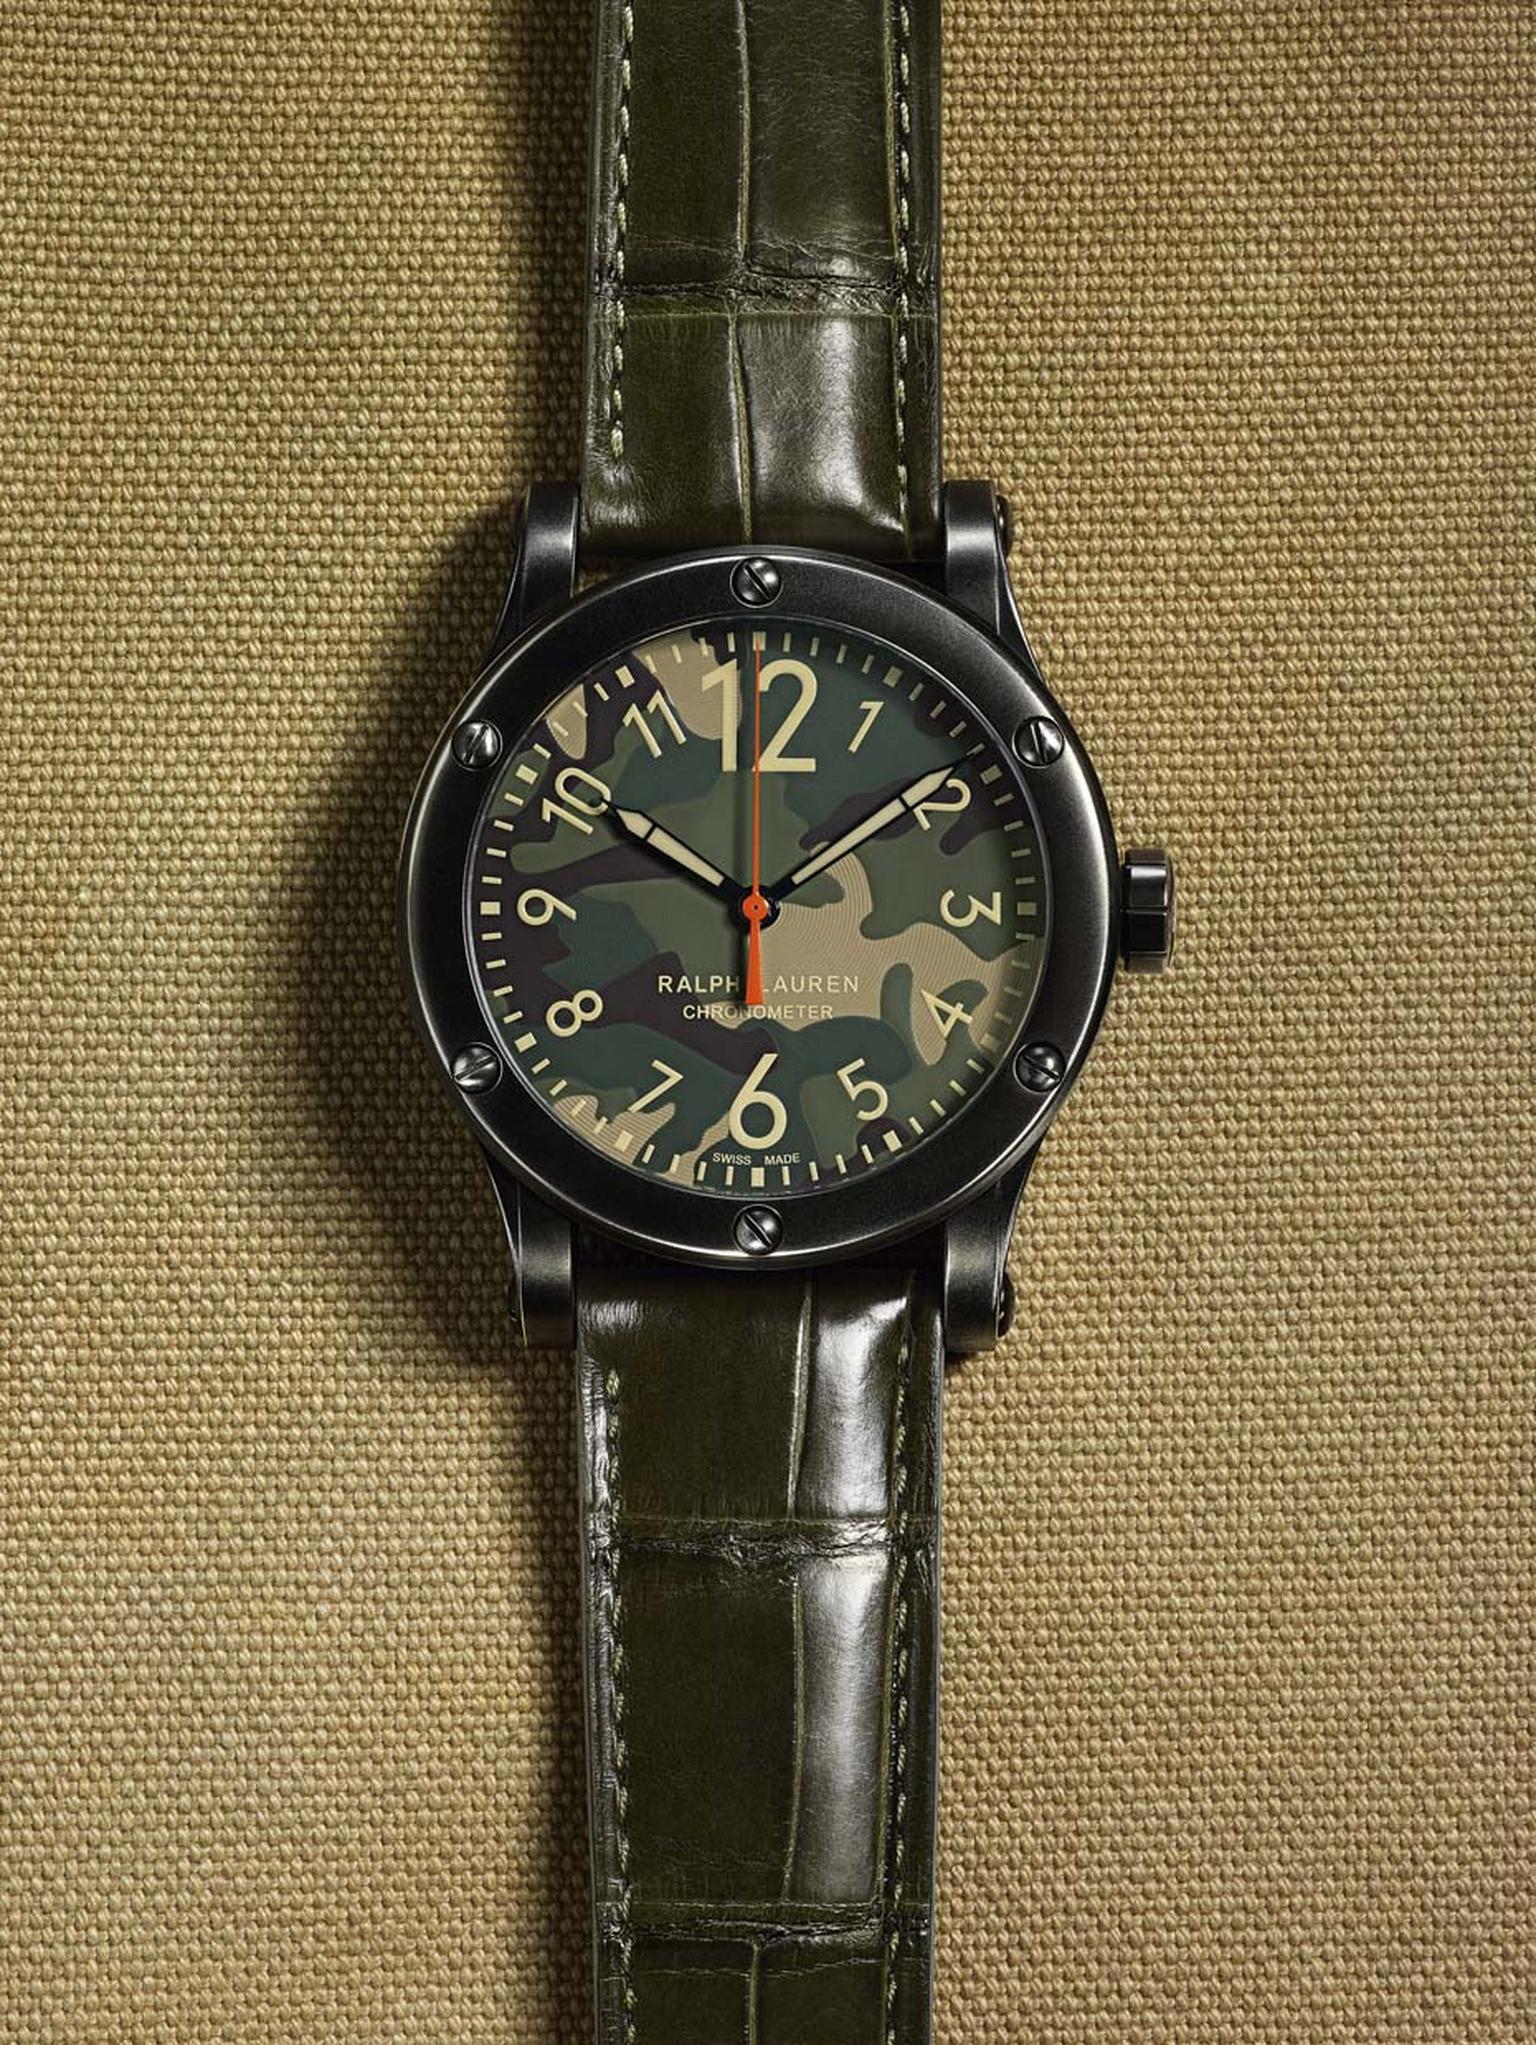 Ralph Lauren_Safari watches_Safari camo watch on bground.jpg